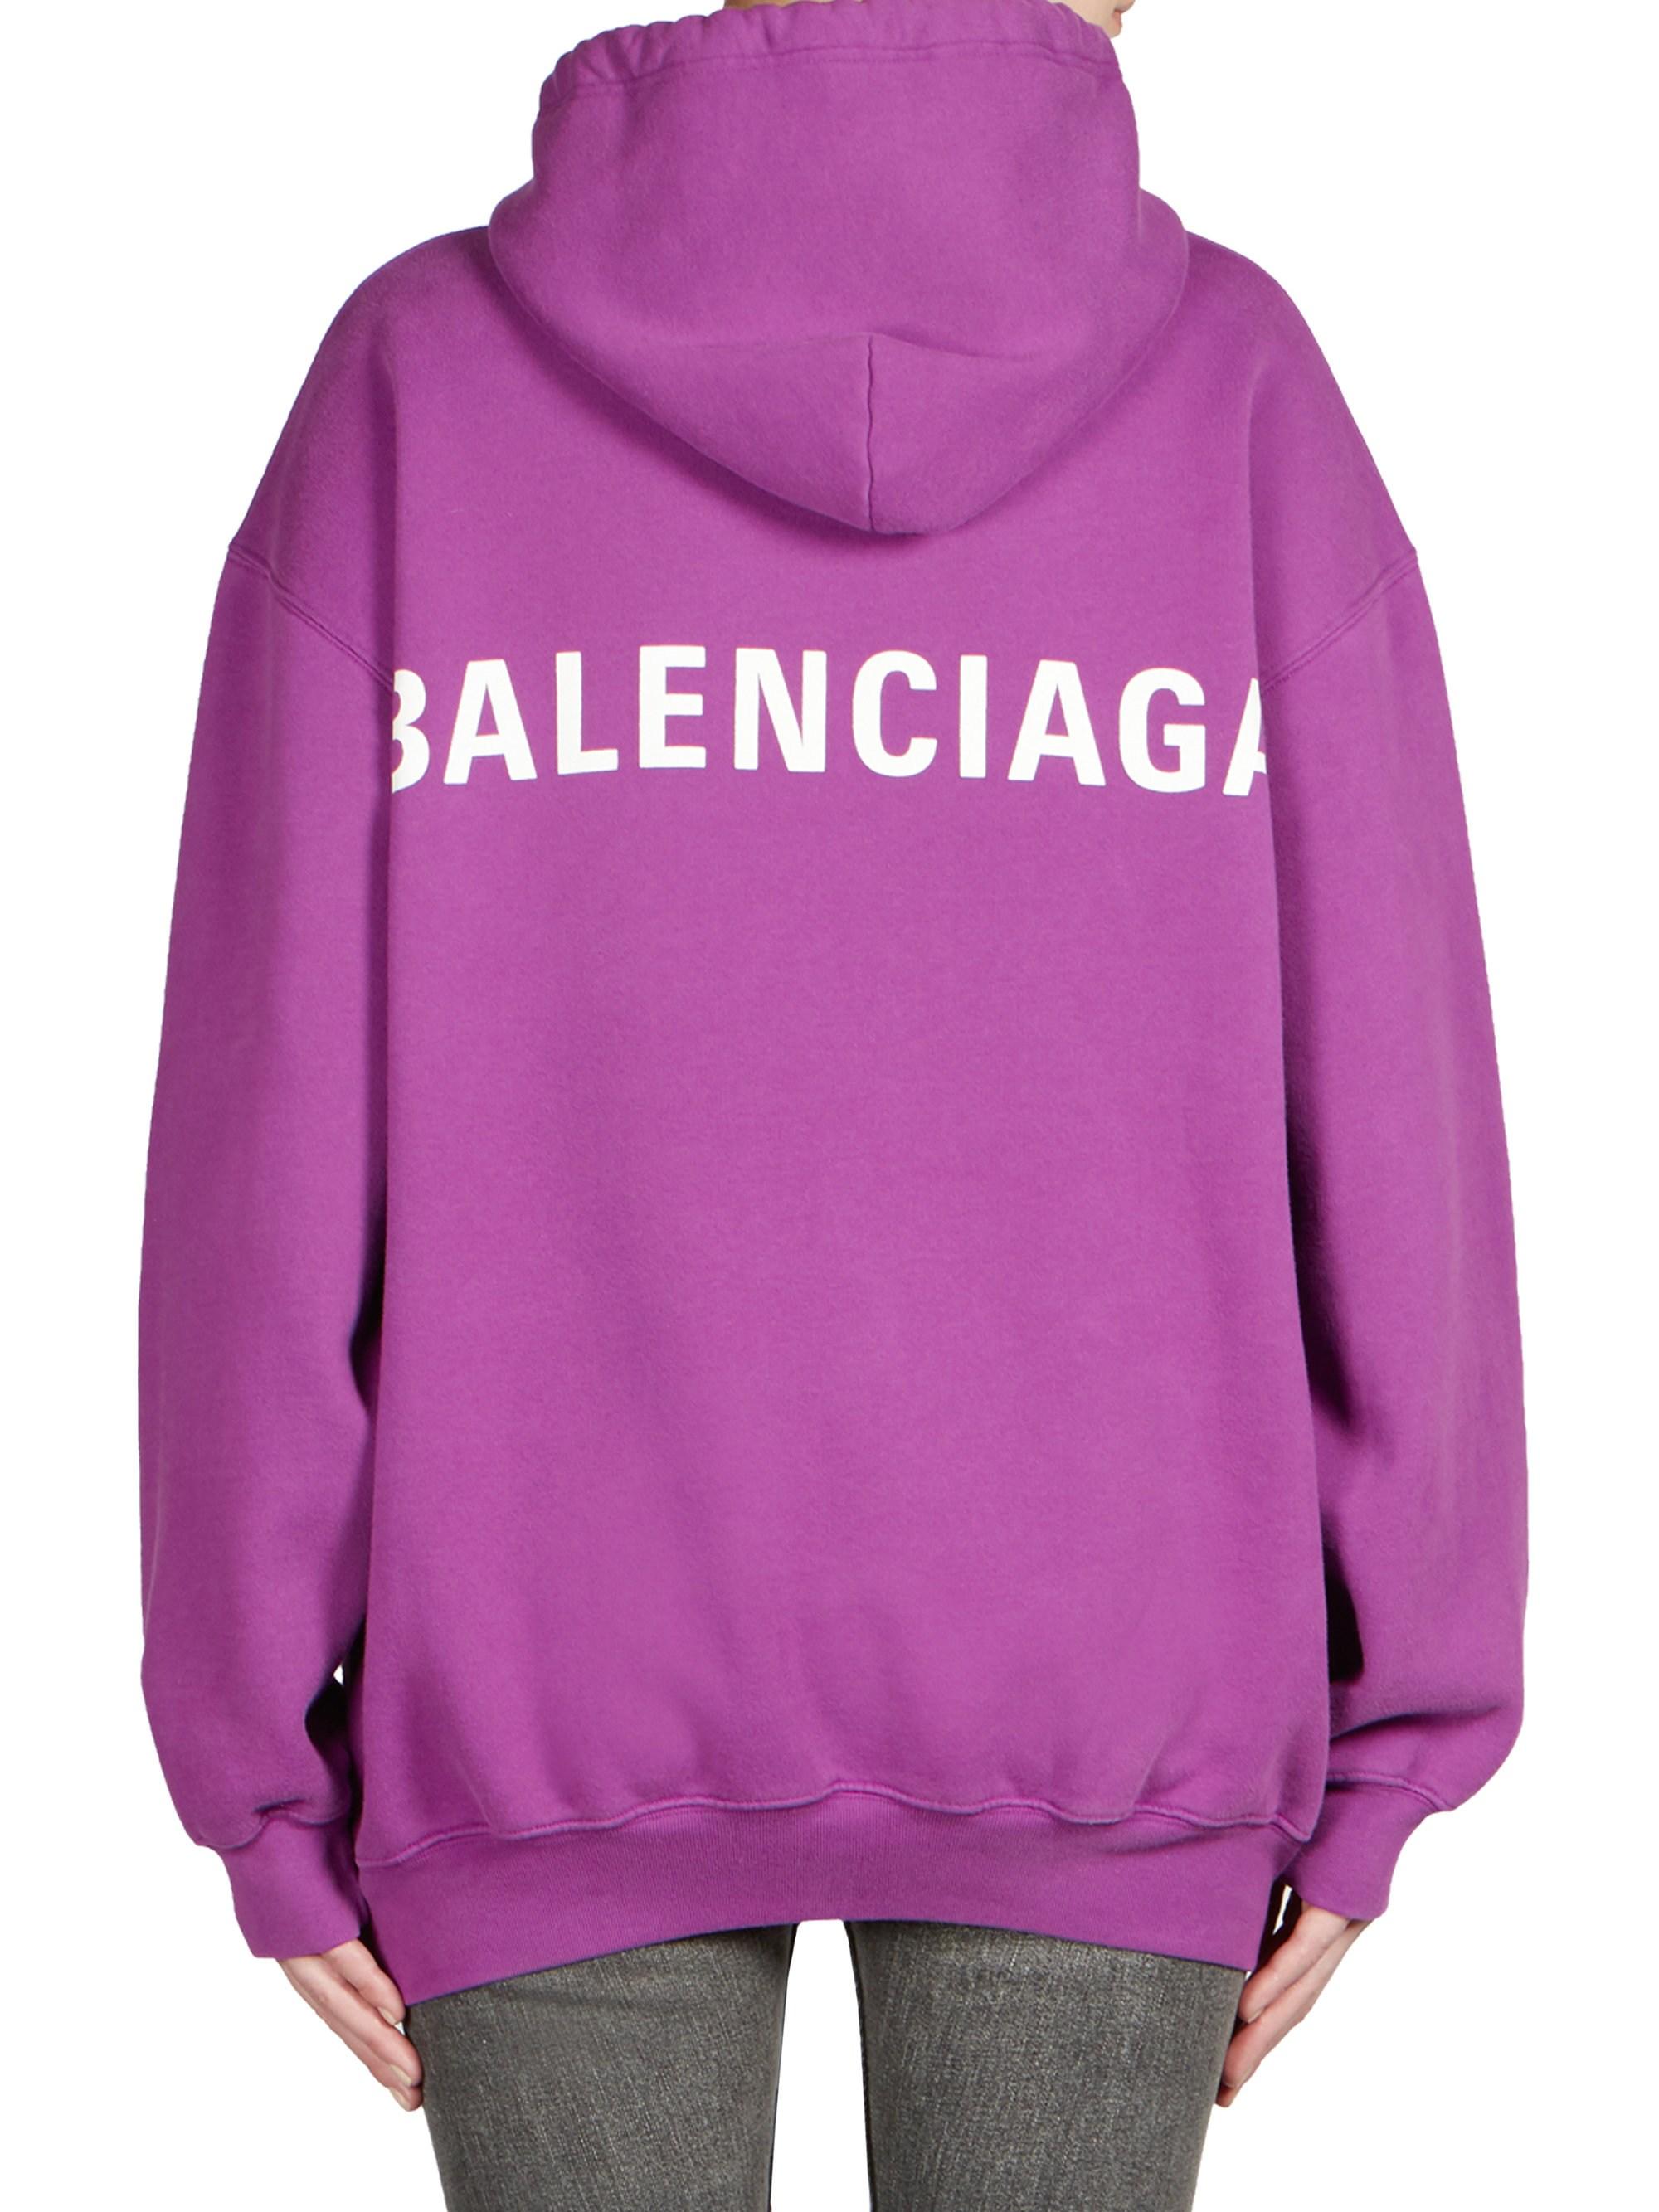 Balenciaga Oversized Logo Back Hoodie in Hot Violet (Purple) | Lyst